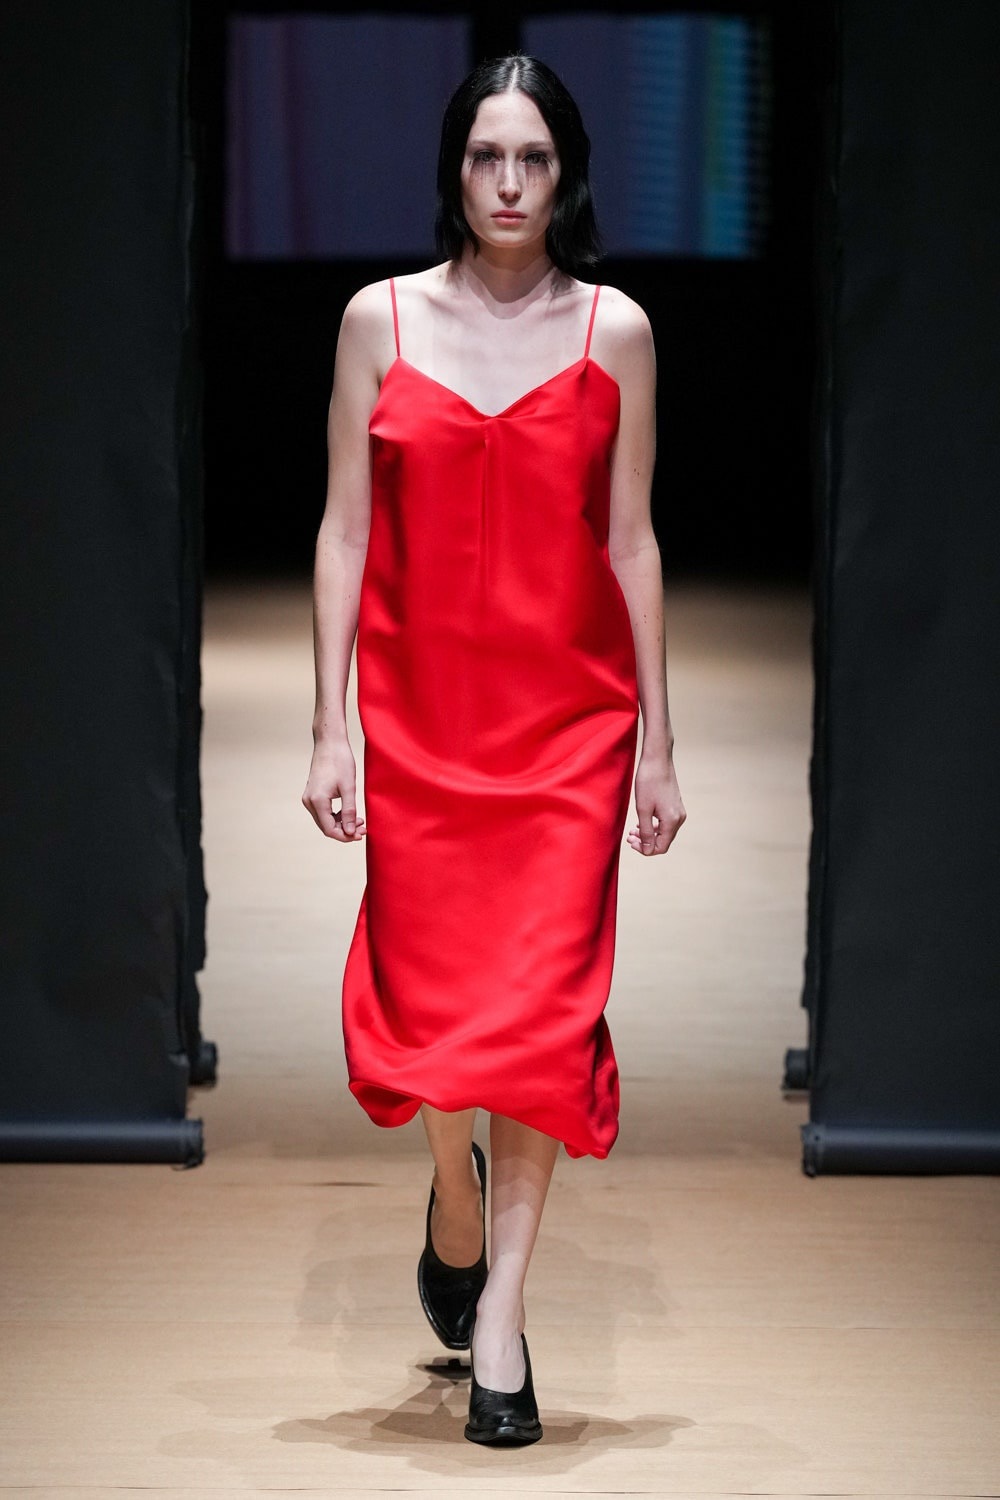 Prada Milan Fashion Week SS23 Spring Summer 2023 Show Runway Raf Simons Miuccia Prada Womenswear Collection First Look Images